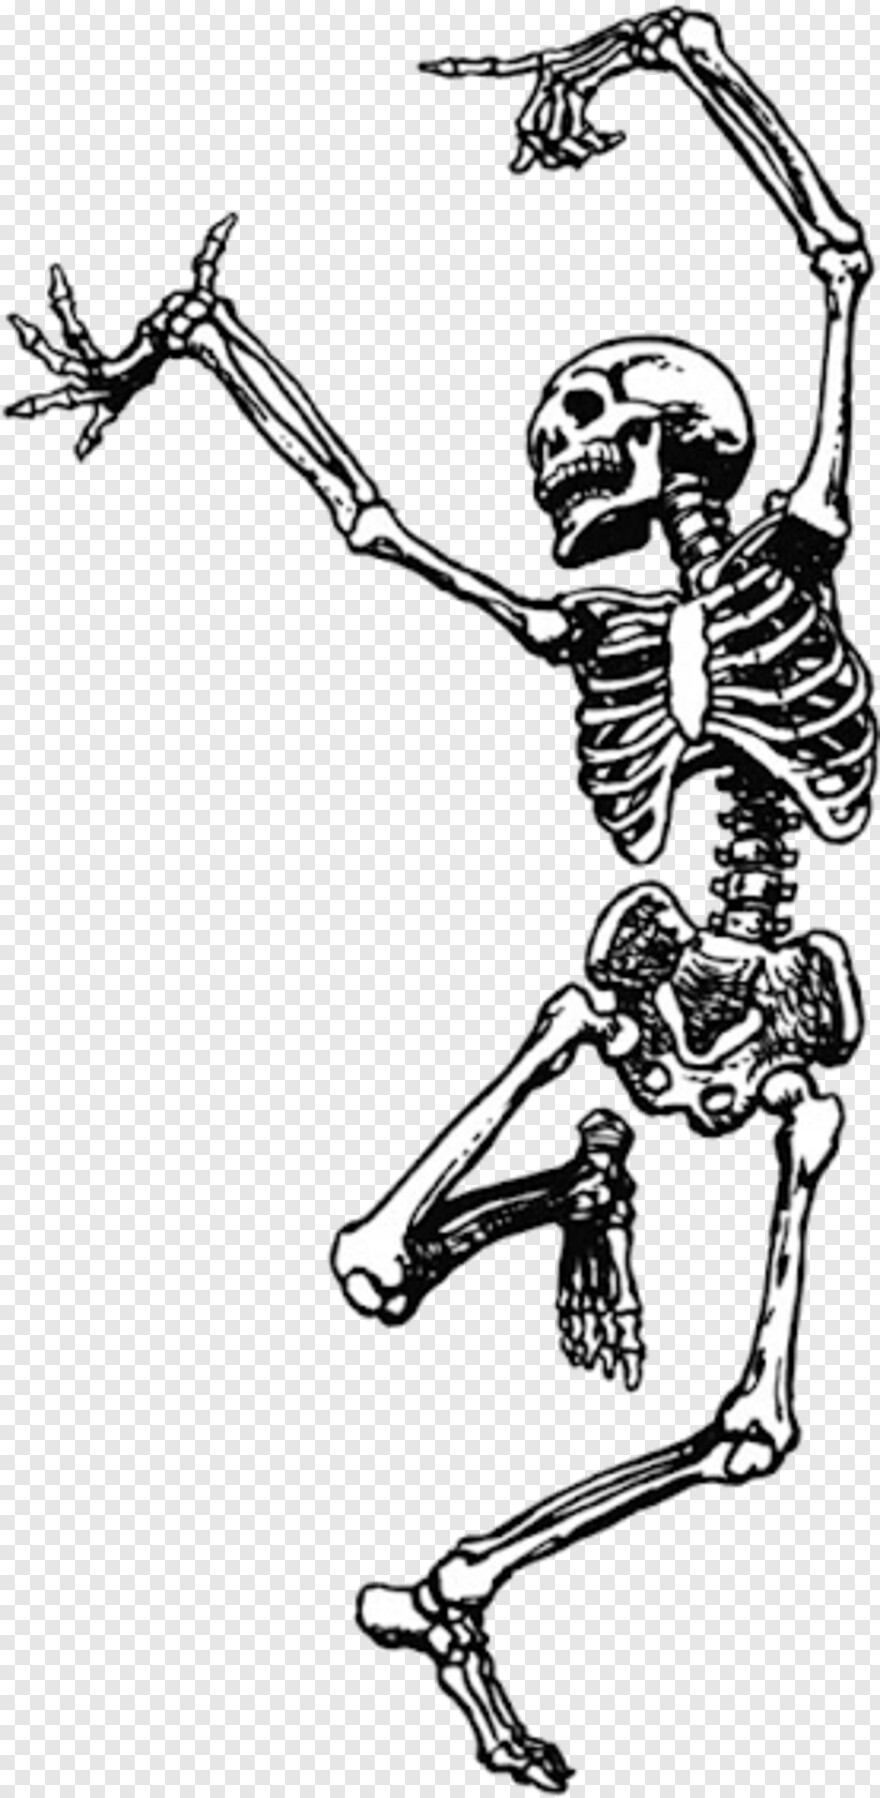  Skeleton, Dancing Gif, Skeleton Hand, Skeleton Arm, Skeleton Head, Skeleton Key